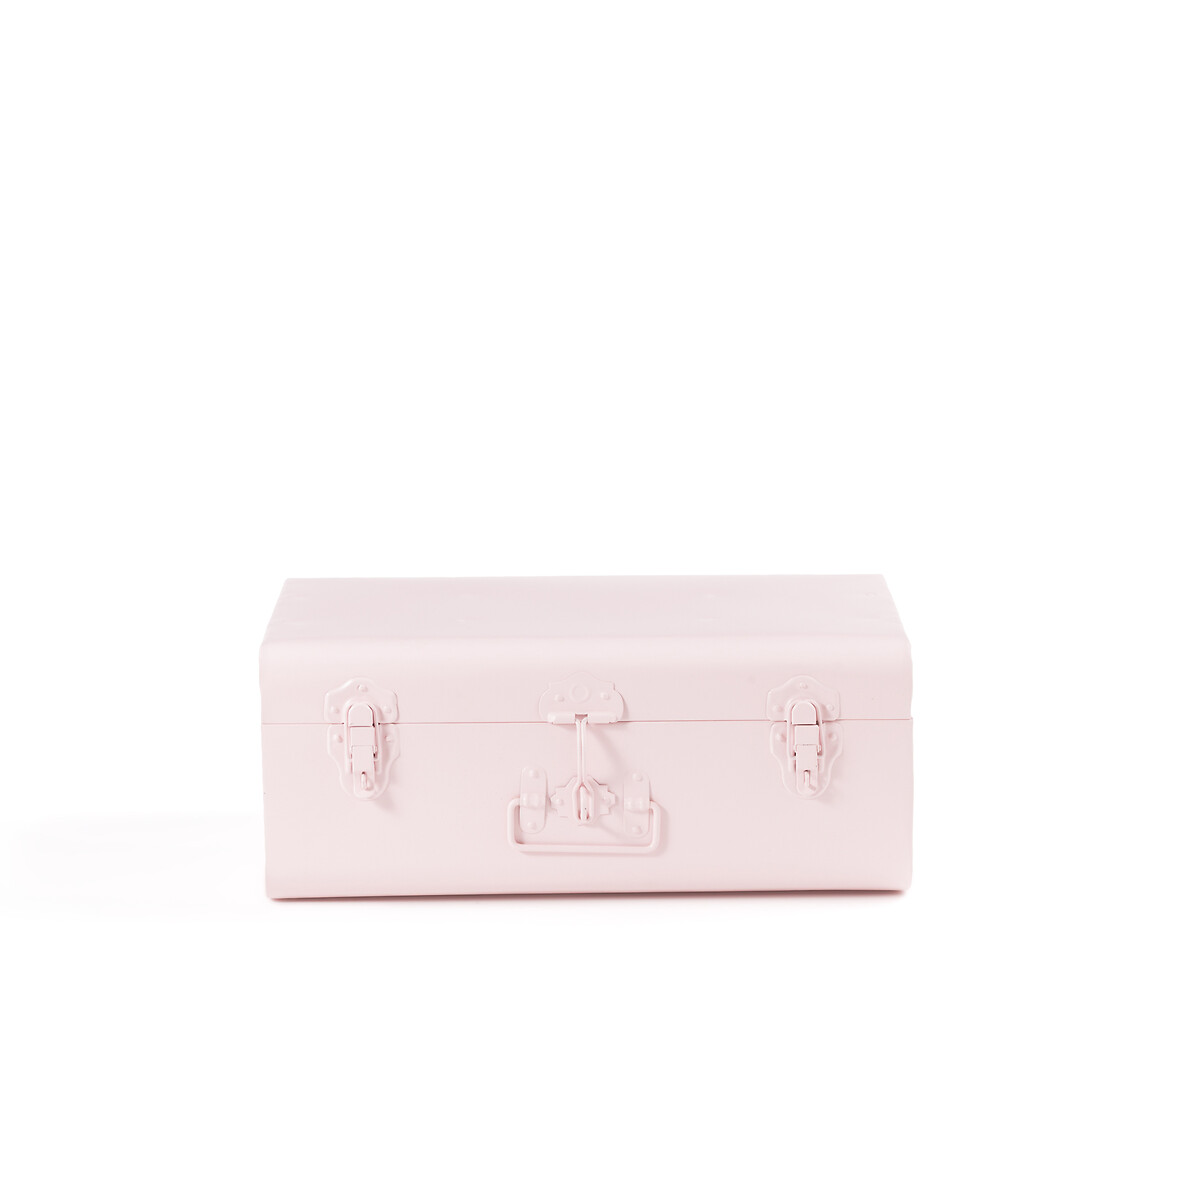 Сундук-чемодан Из металла Masa единый размер розовый